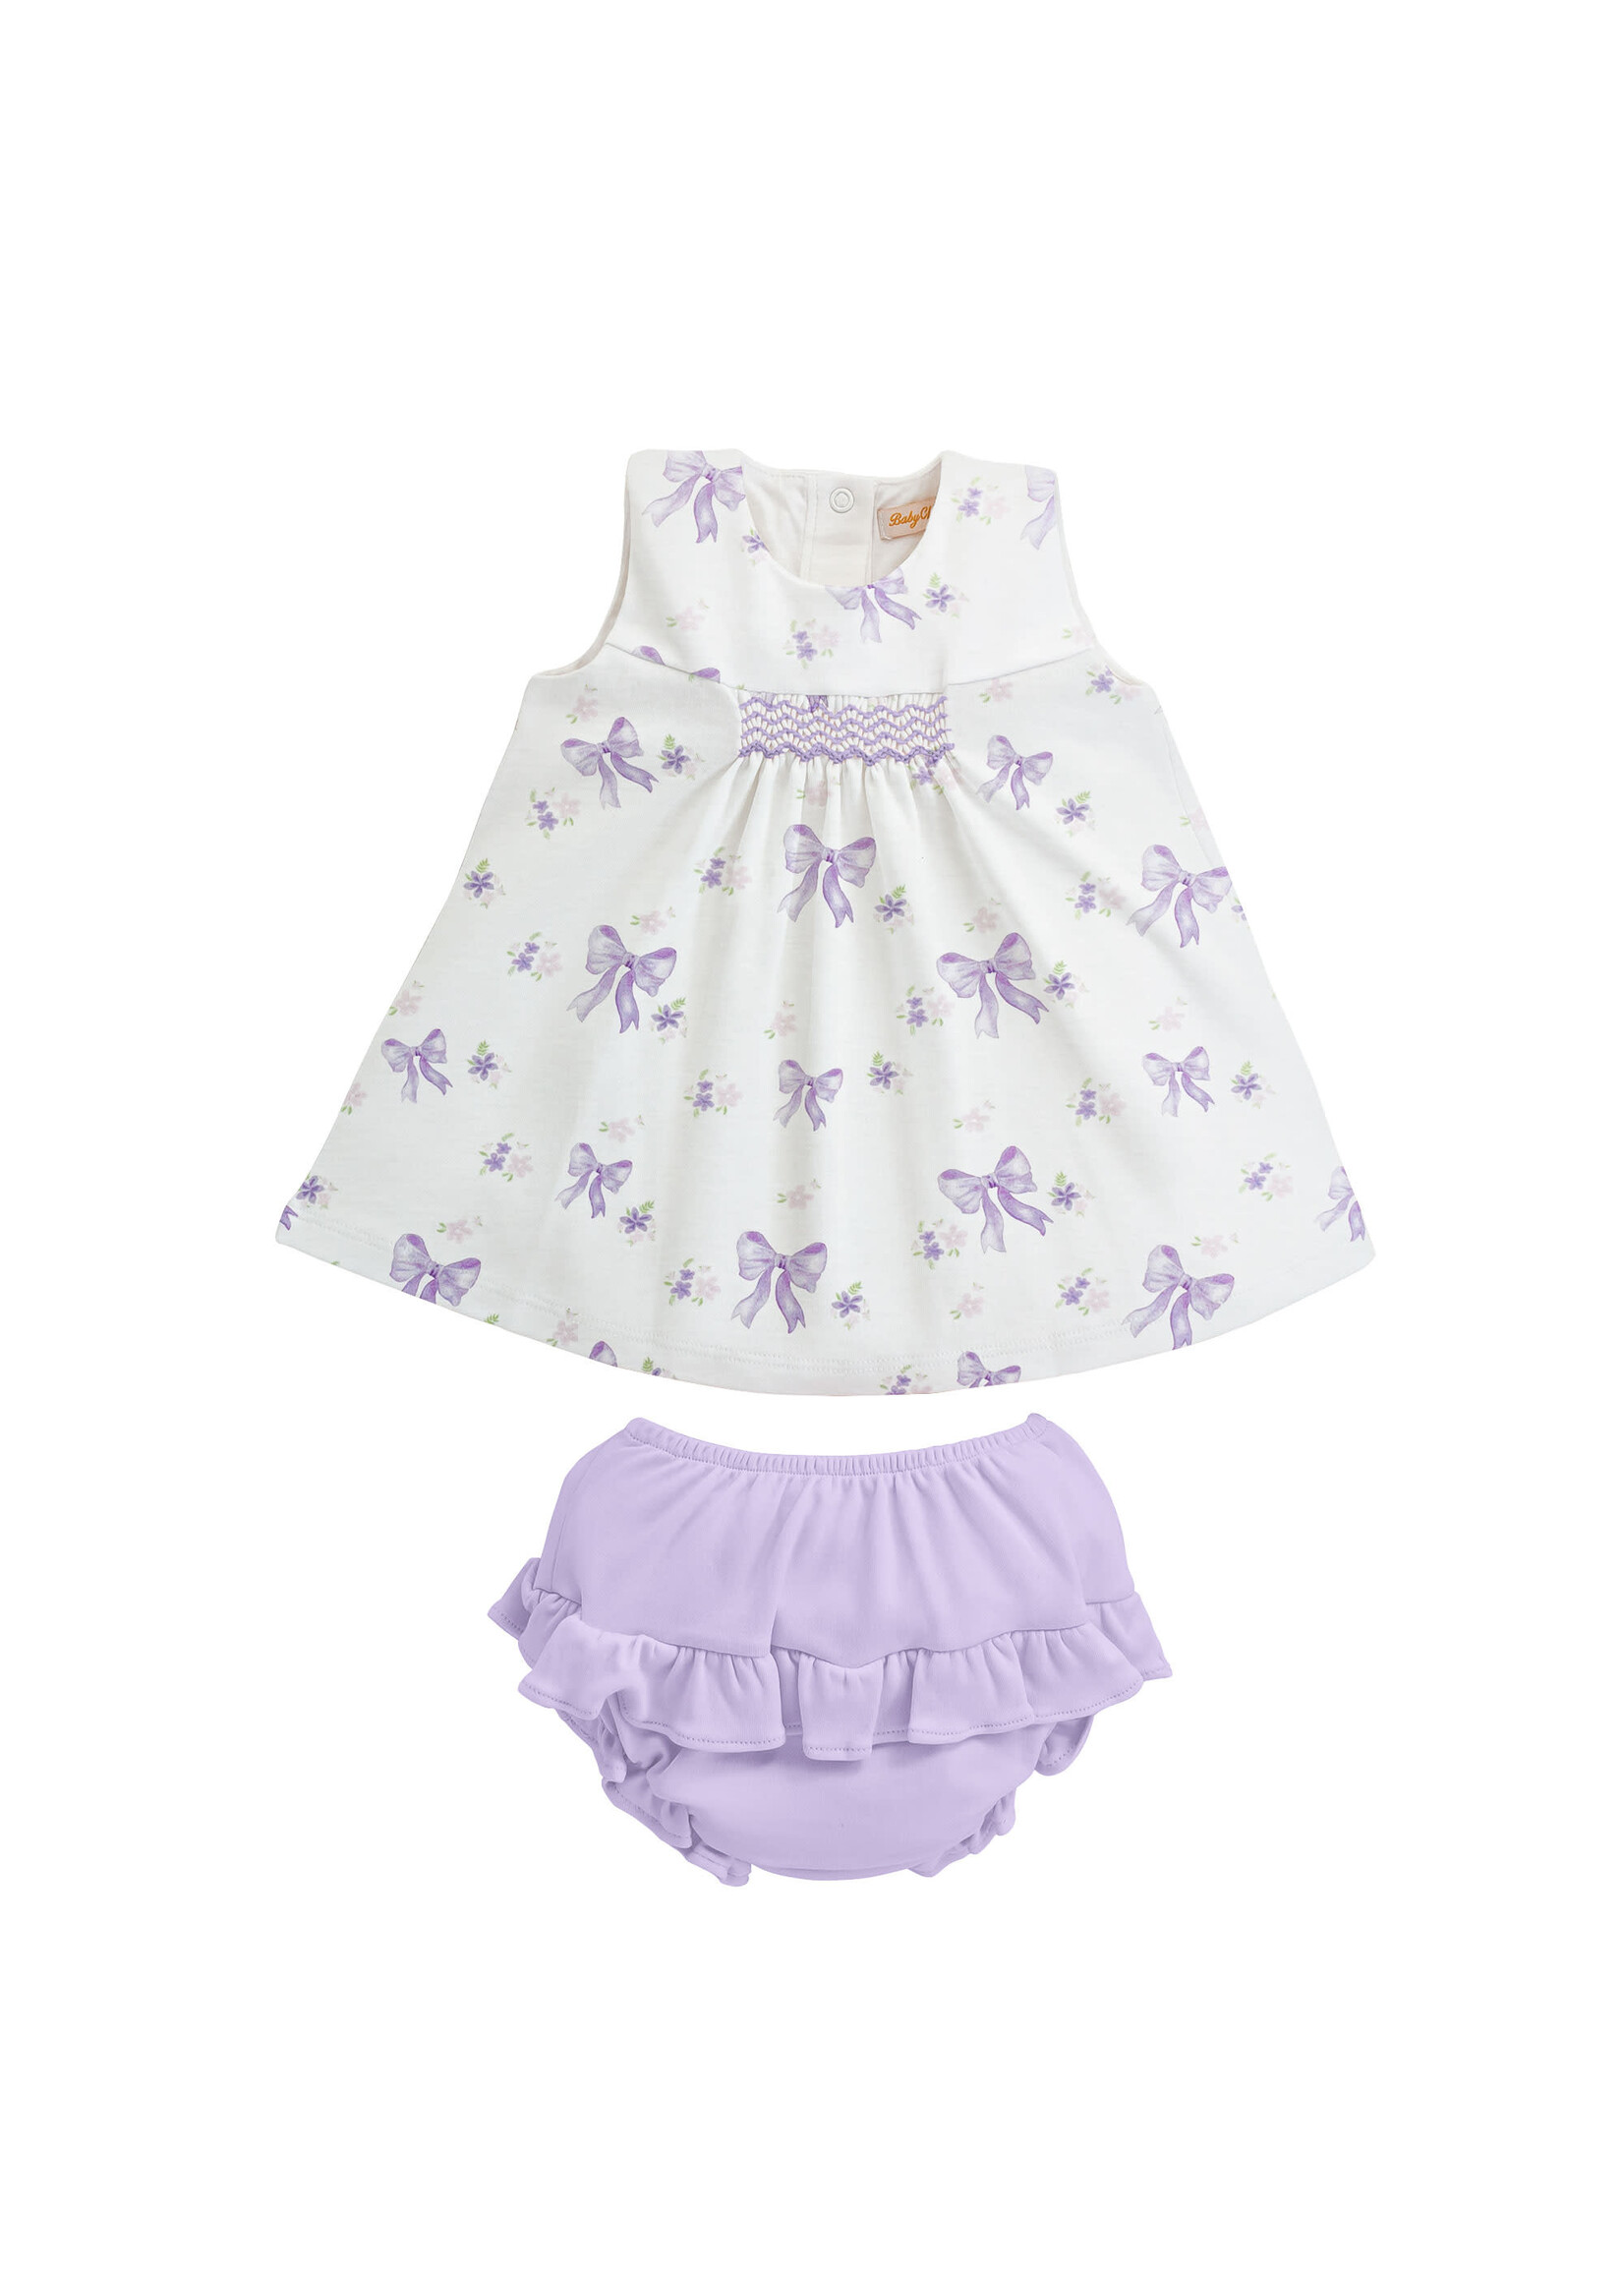 Baby Club Chic Lavender Bows Dress w/ Diaper Cover